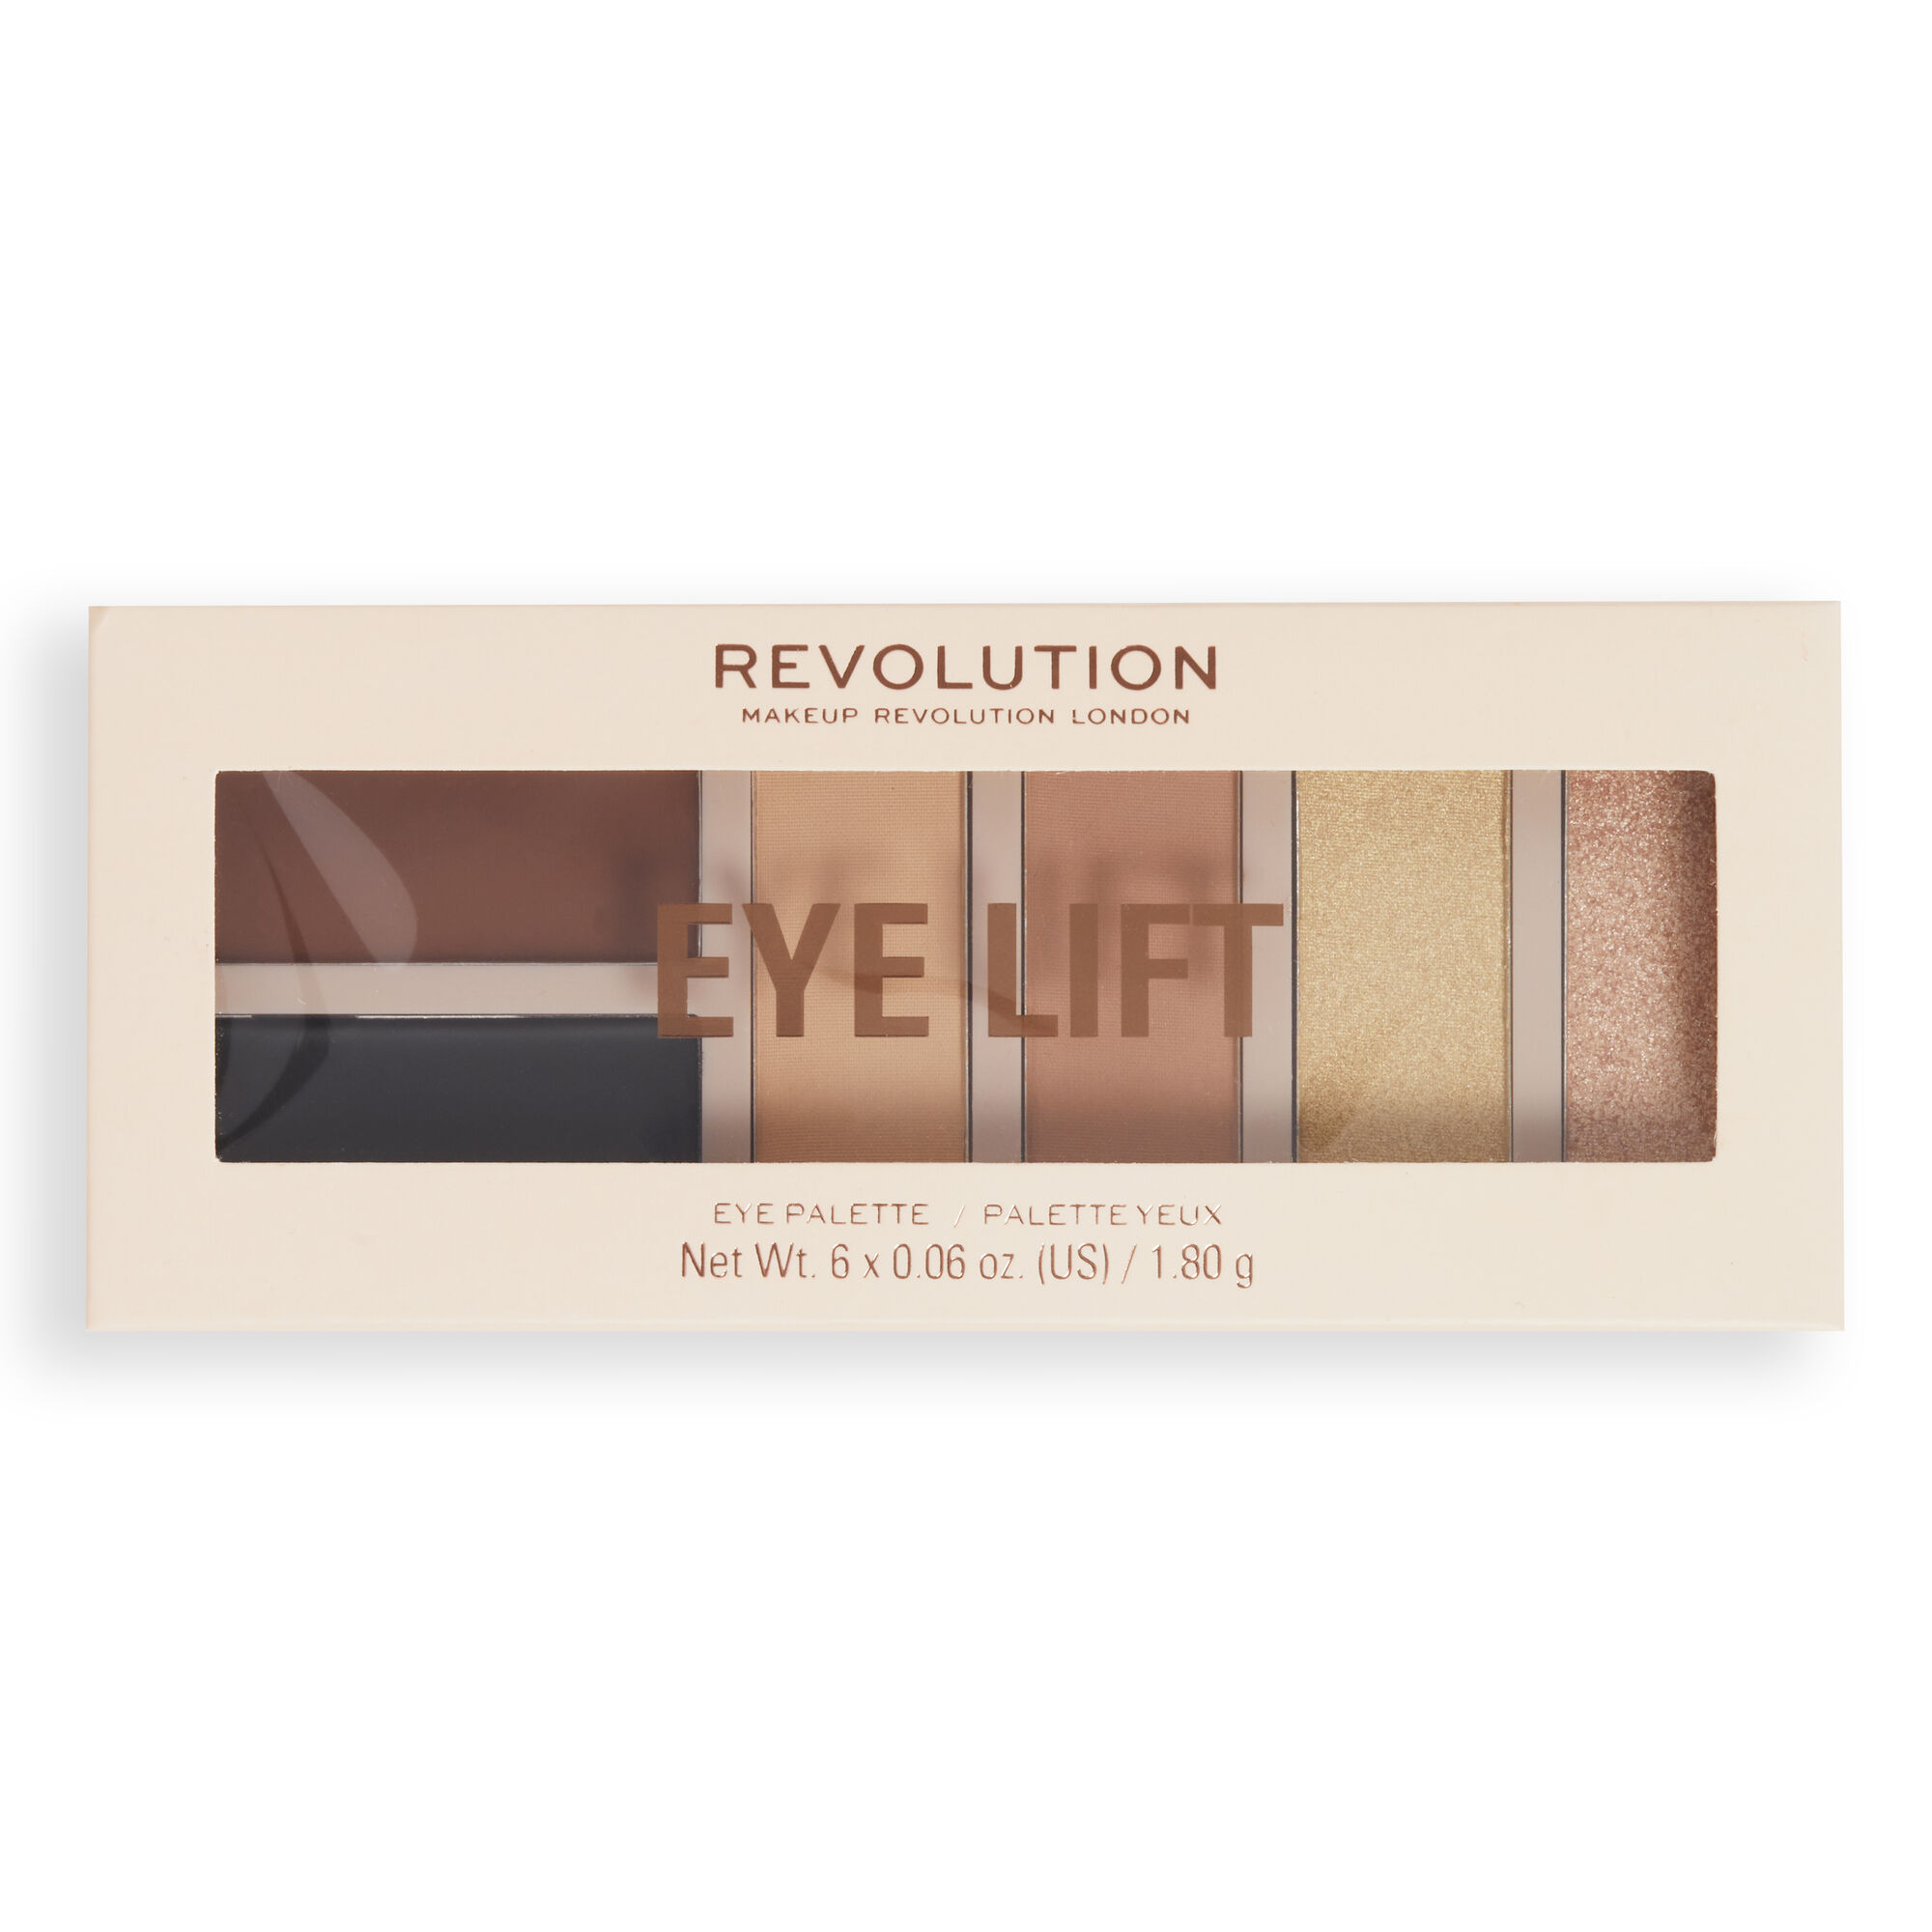 Палетка Revolution Makeup для макияжа глаз: тени-бронзер подводка тени Eye Lift Palette пучина сирены уэллс м